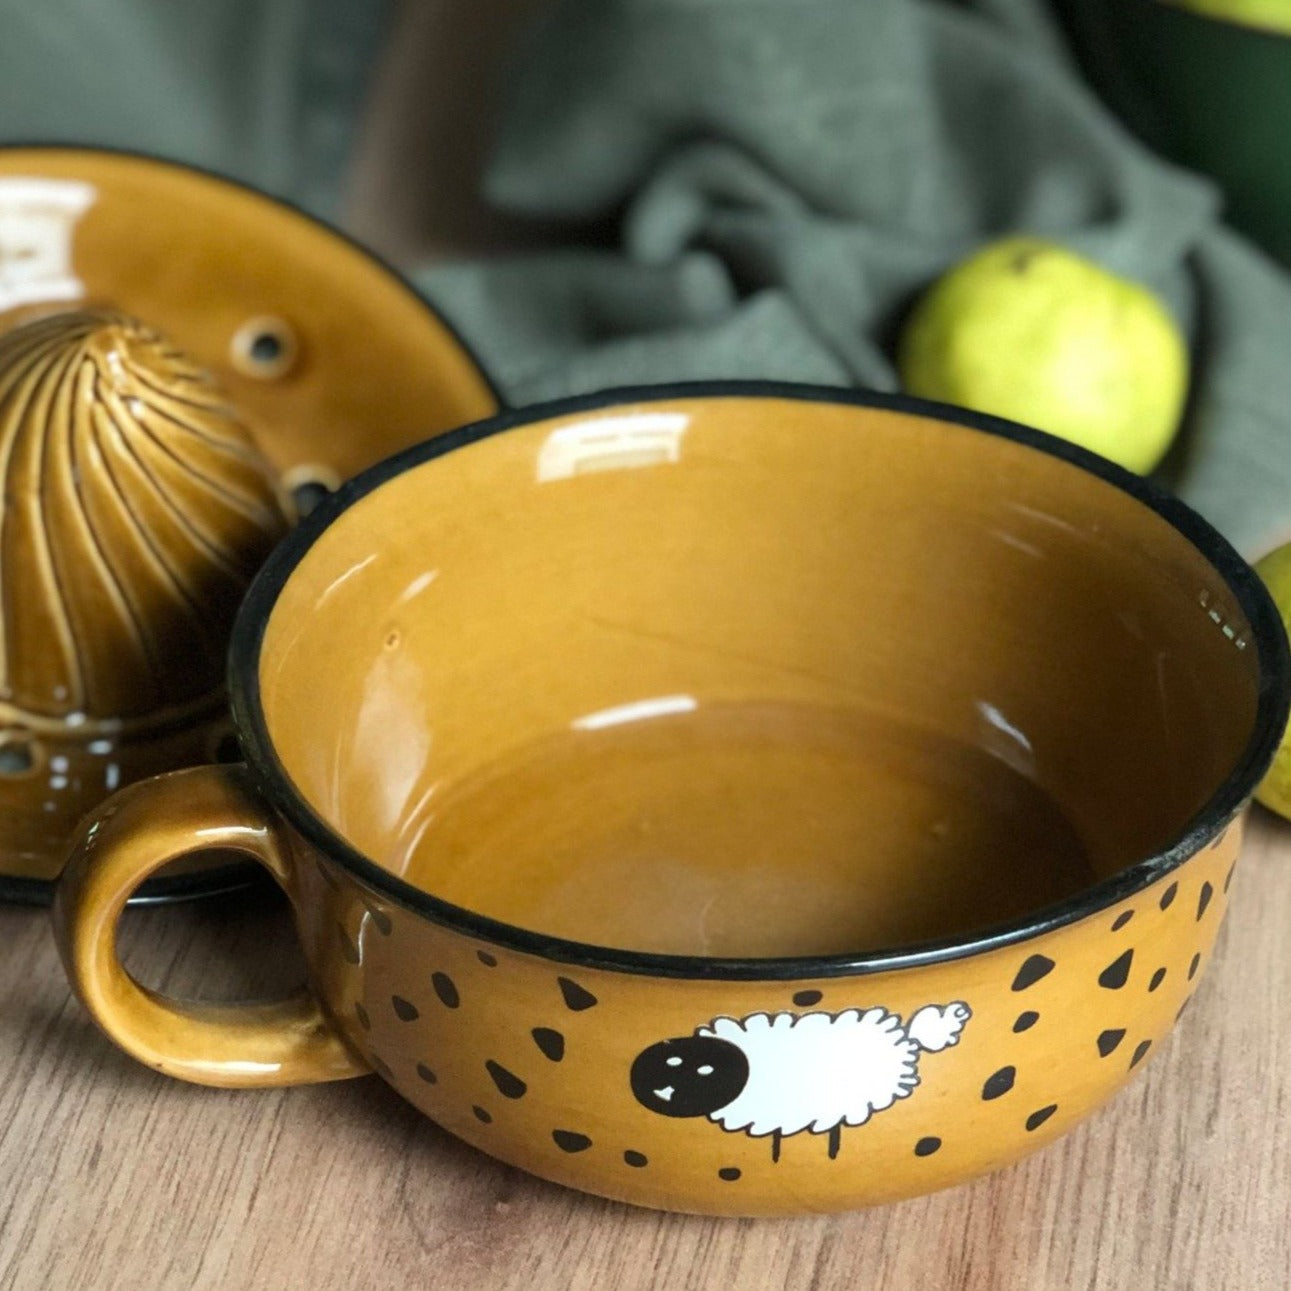 Handmade ceramic juicer, made in India